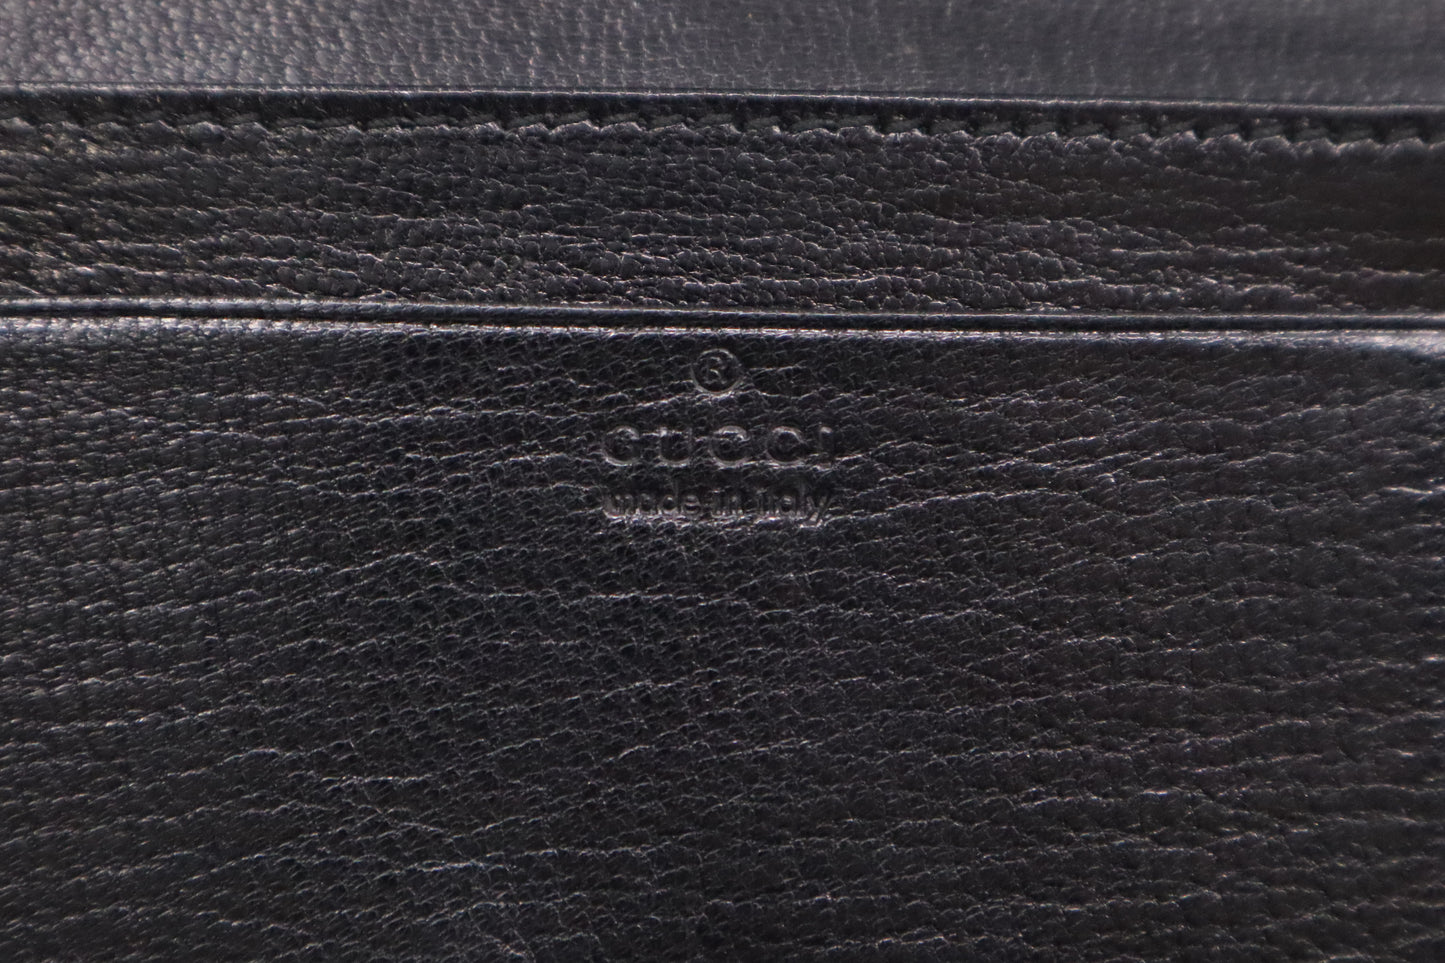 Gucci Card Case in Black Leather